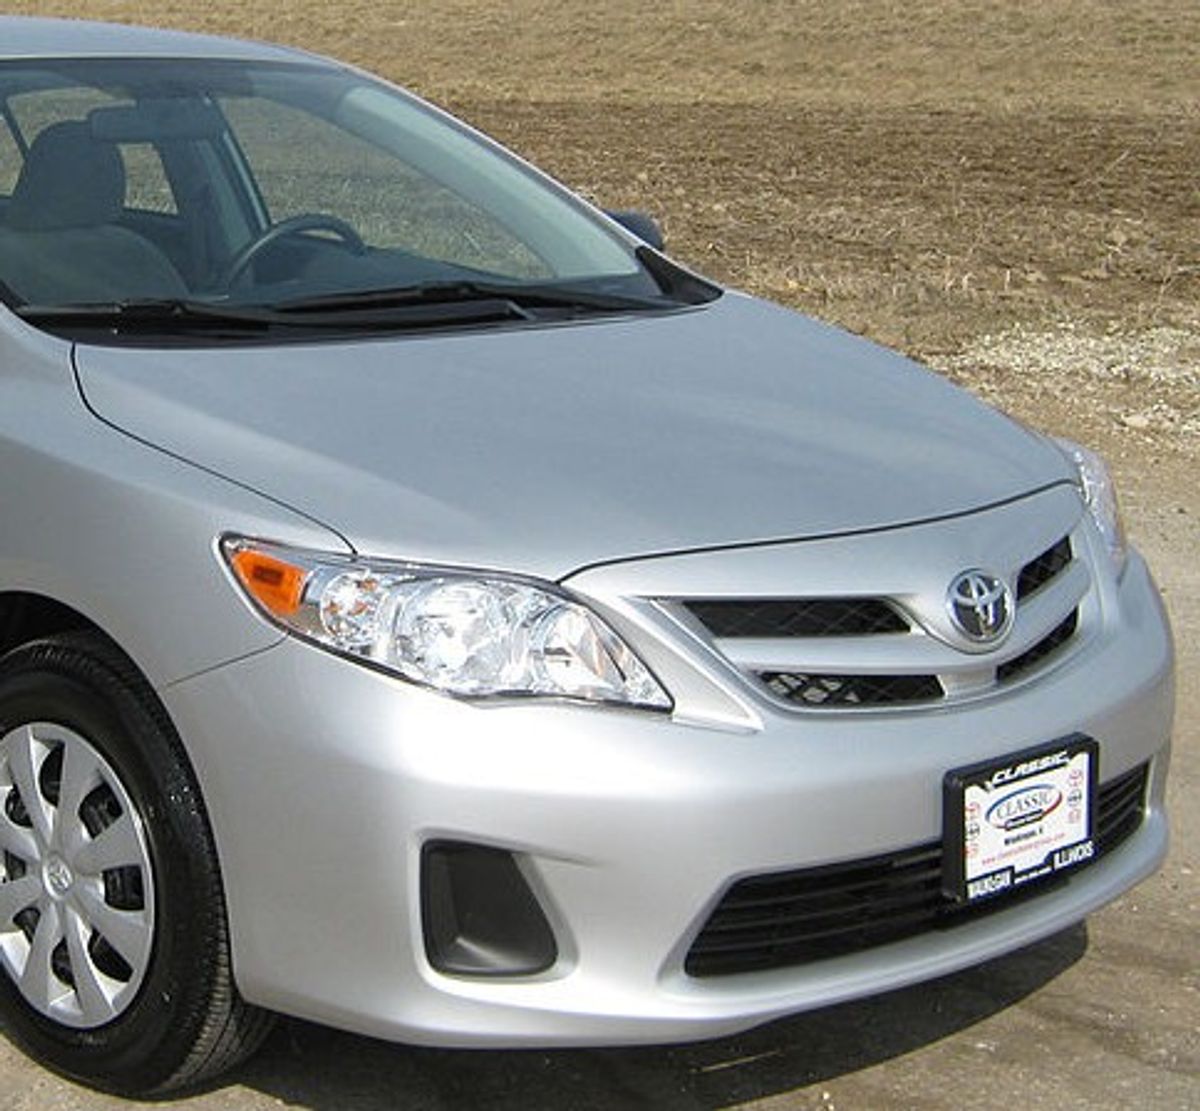  Toyota Corolla (Wikimedia)  